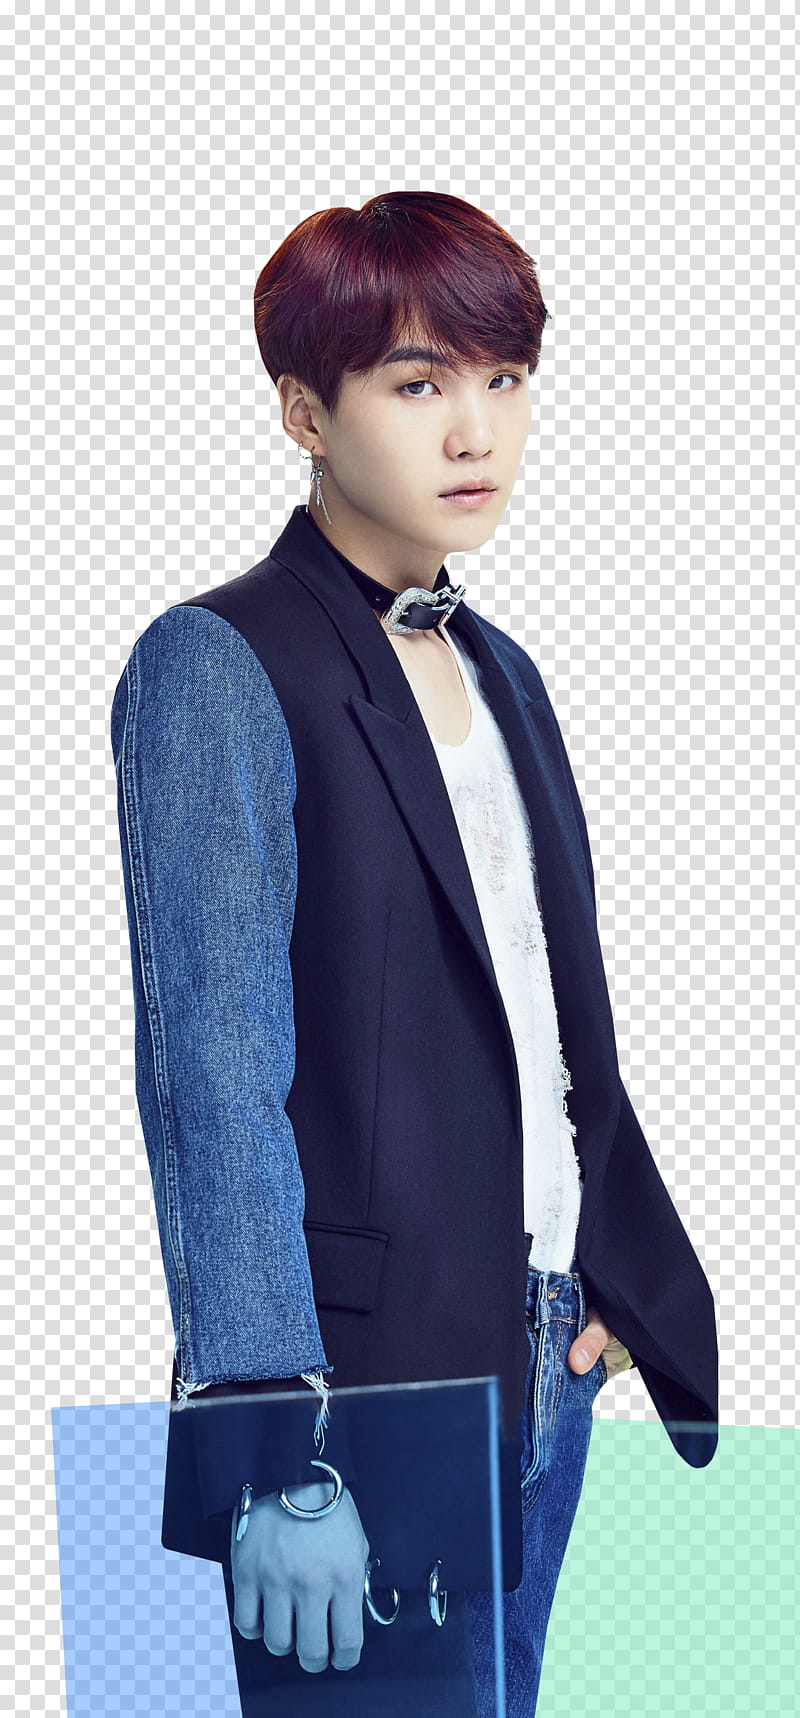 BTS FAKE LOVE Japanese Ver, men's black and blue suit jacket transparent background PNG clipart